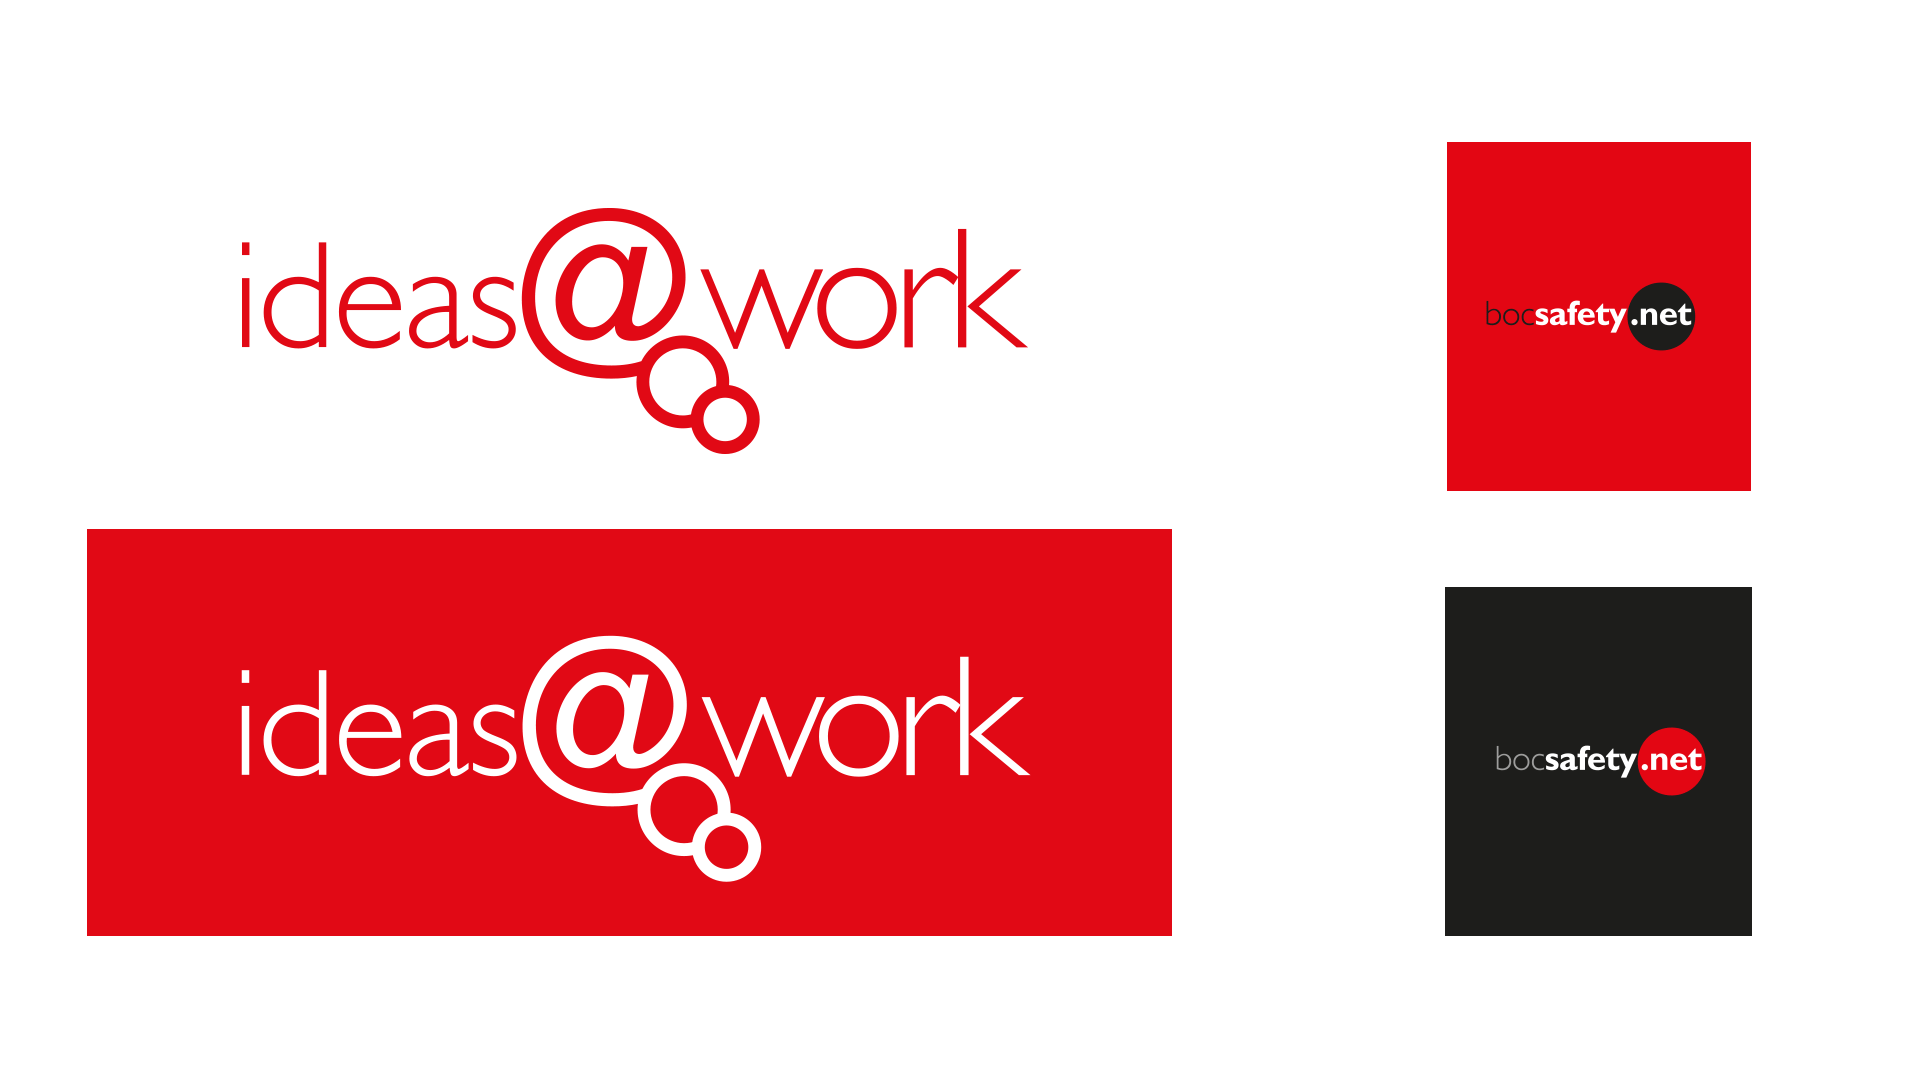 Ideas at Work – bocsafety.net logos